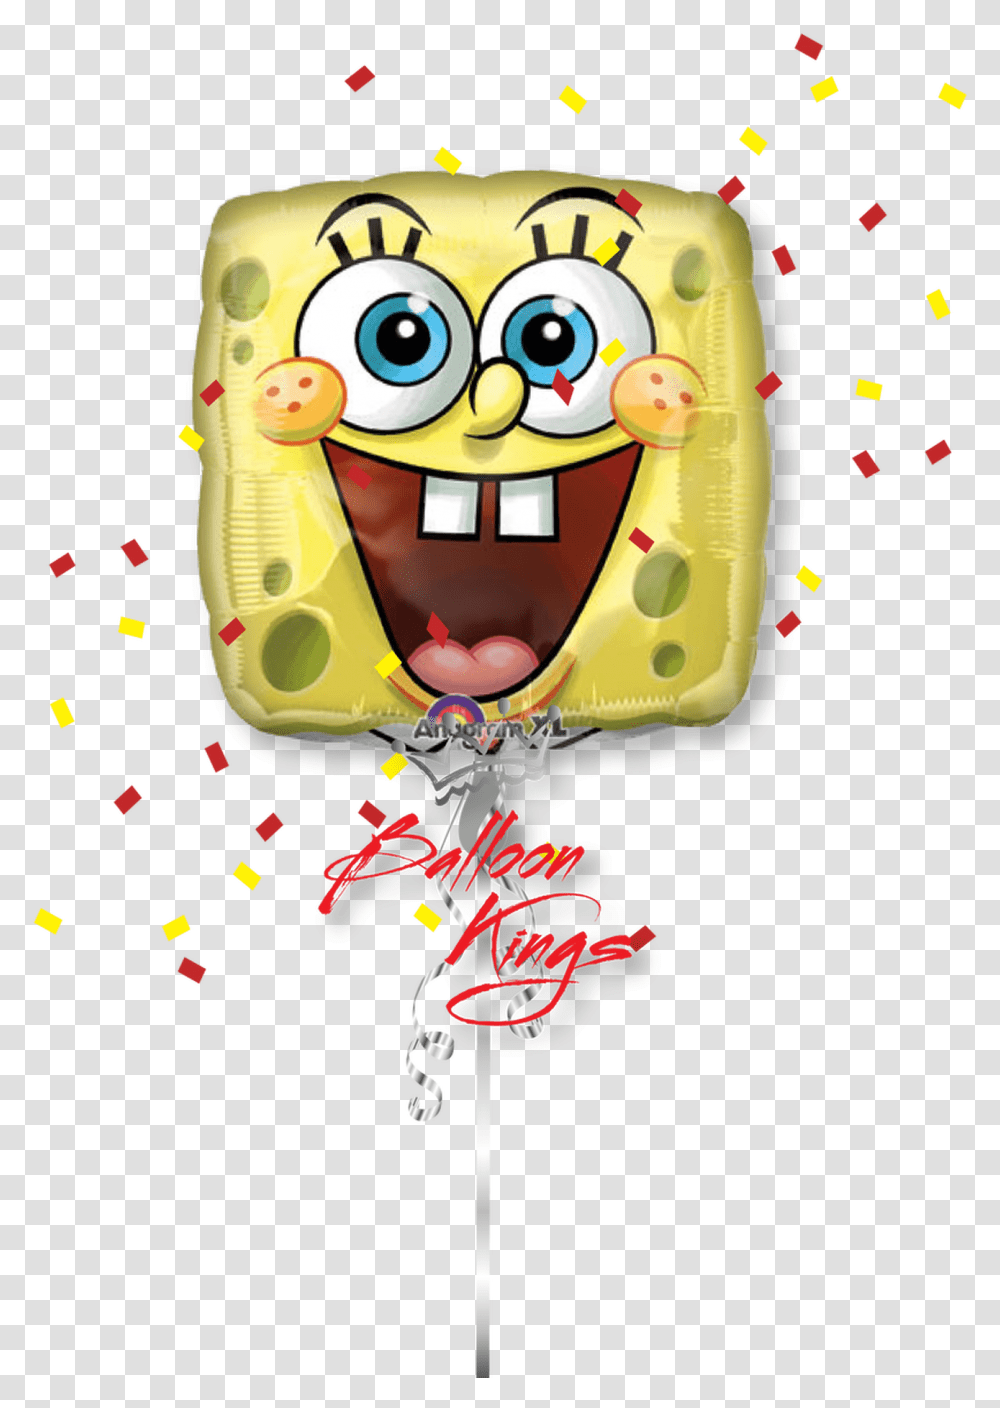 Spongebob Square Face Spongebob, Toy, Paper, Confetti, Sprinkles Transparent Png